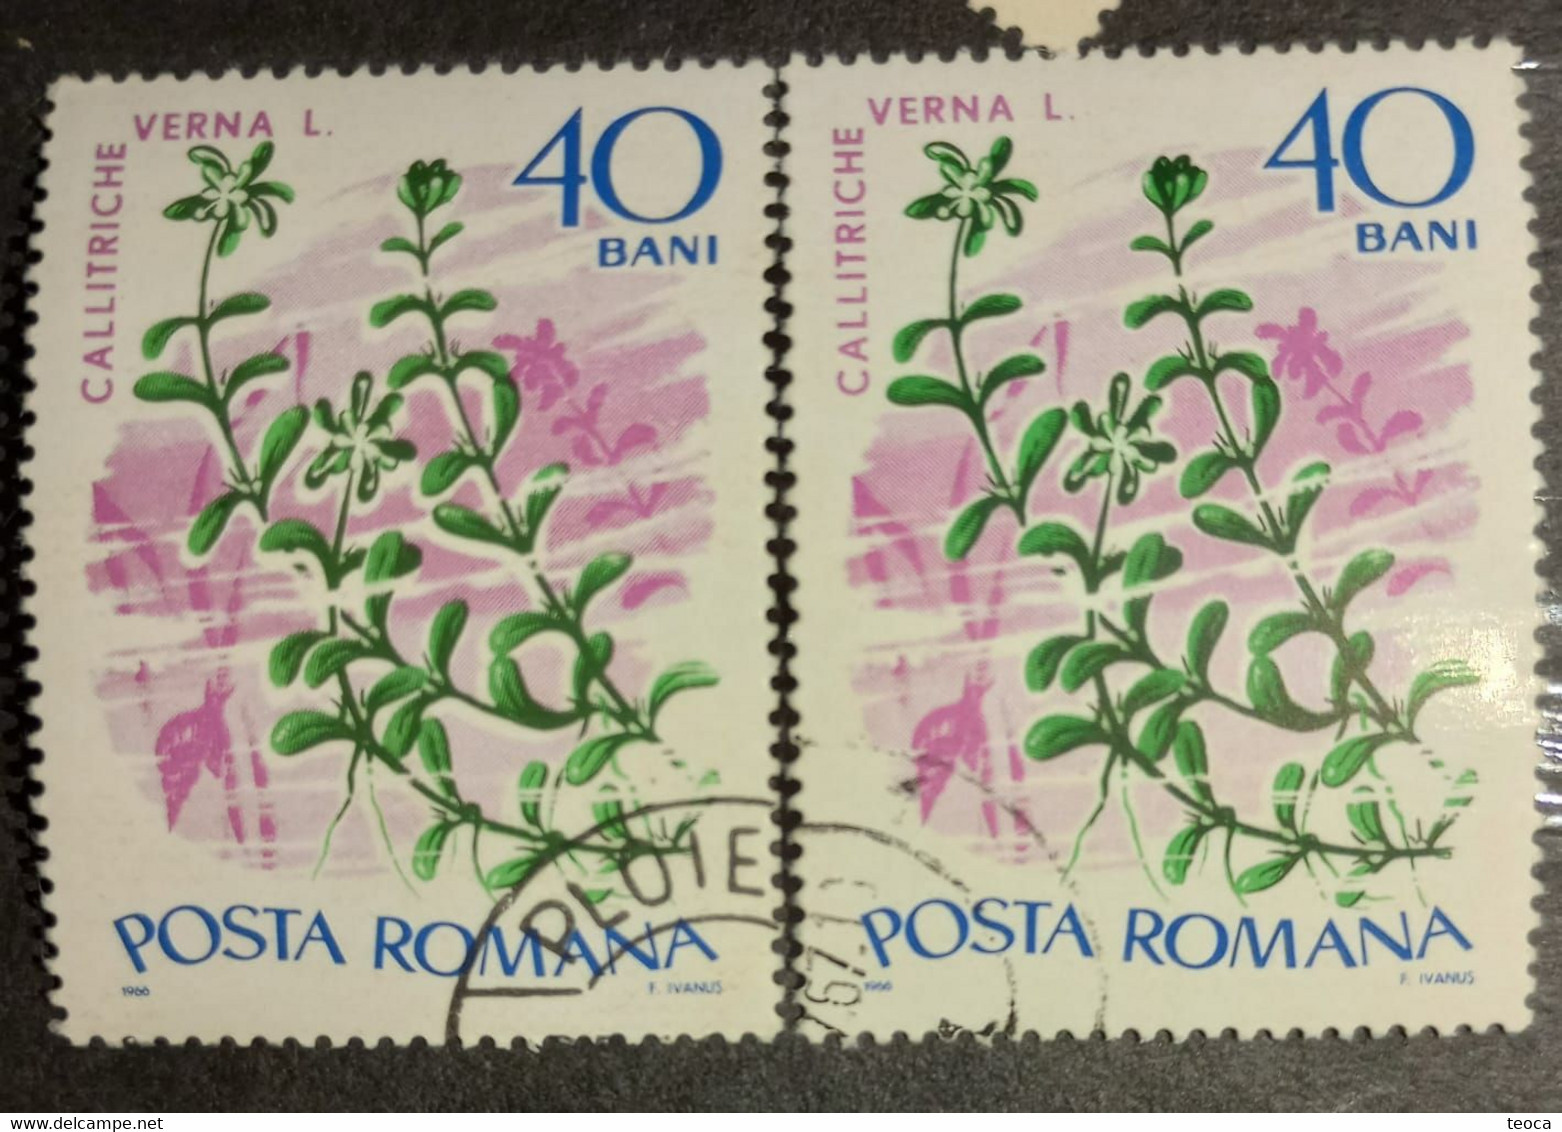 Stamps Errors Romania 1966 # Mi 2528 Printed With Misplaced Plants Flower Image Used - Errors, Freaks & Oddities (EFO)